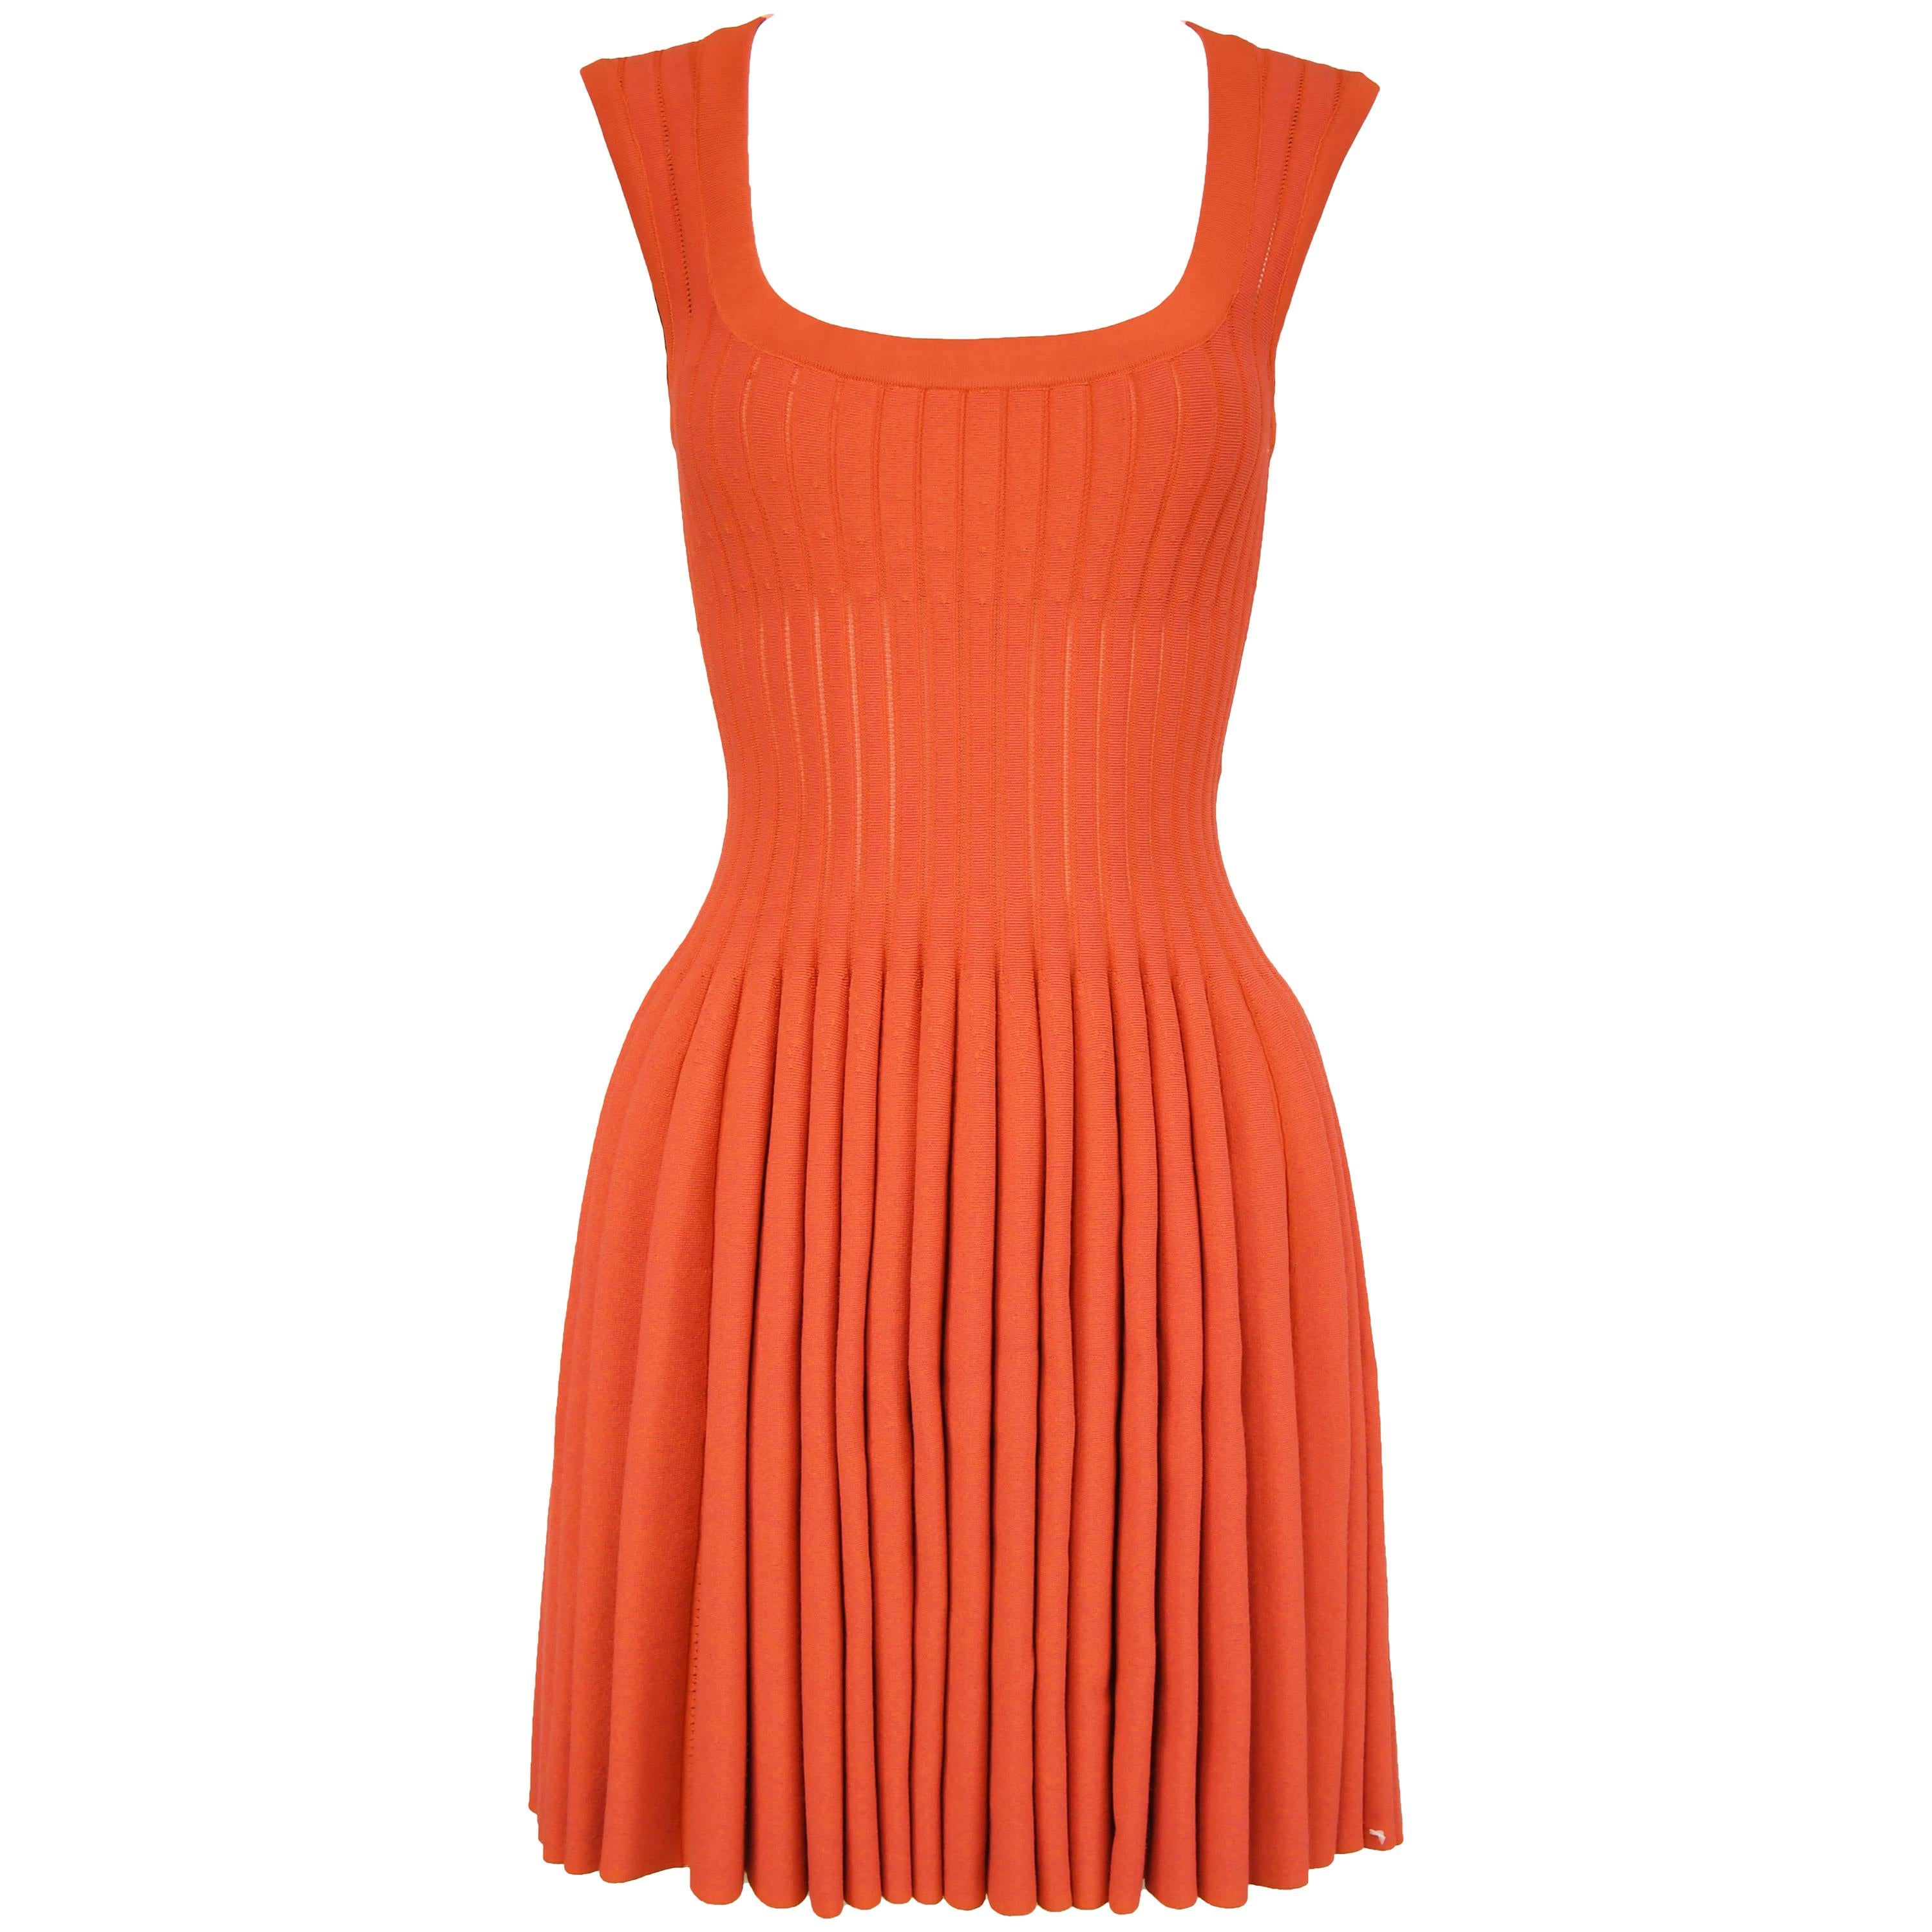 Alaia Dark Coral Fit & Flare Dress - Size FR 38 im Angebot